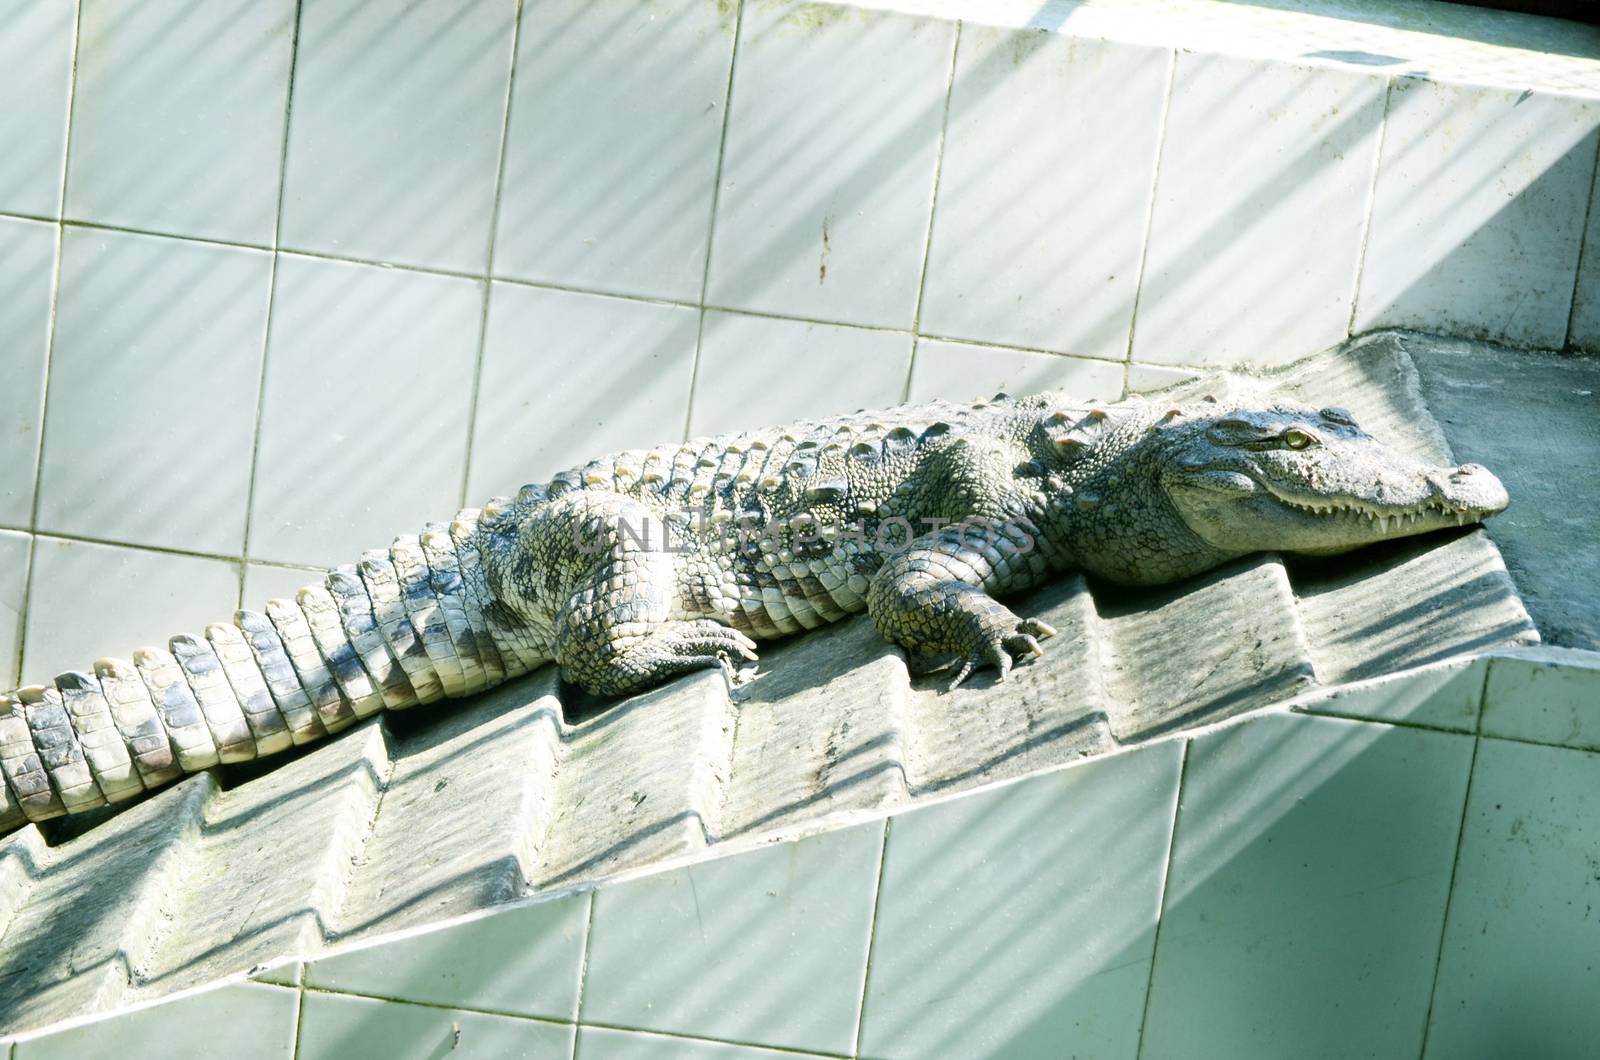 Nile Crocodile very closeup image capture by Emdaduljs